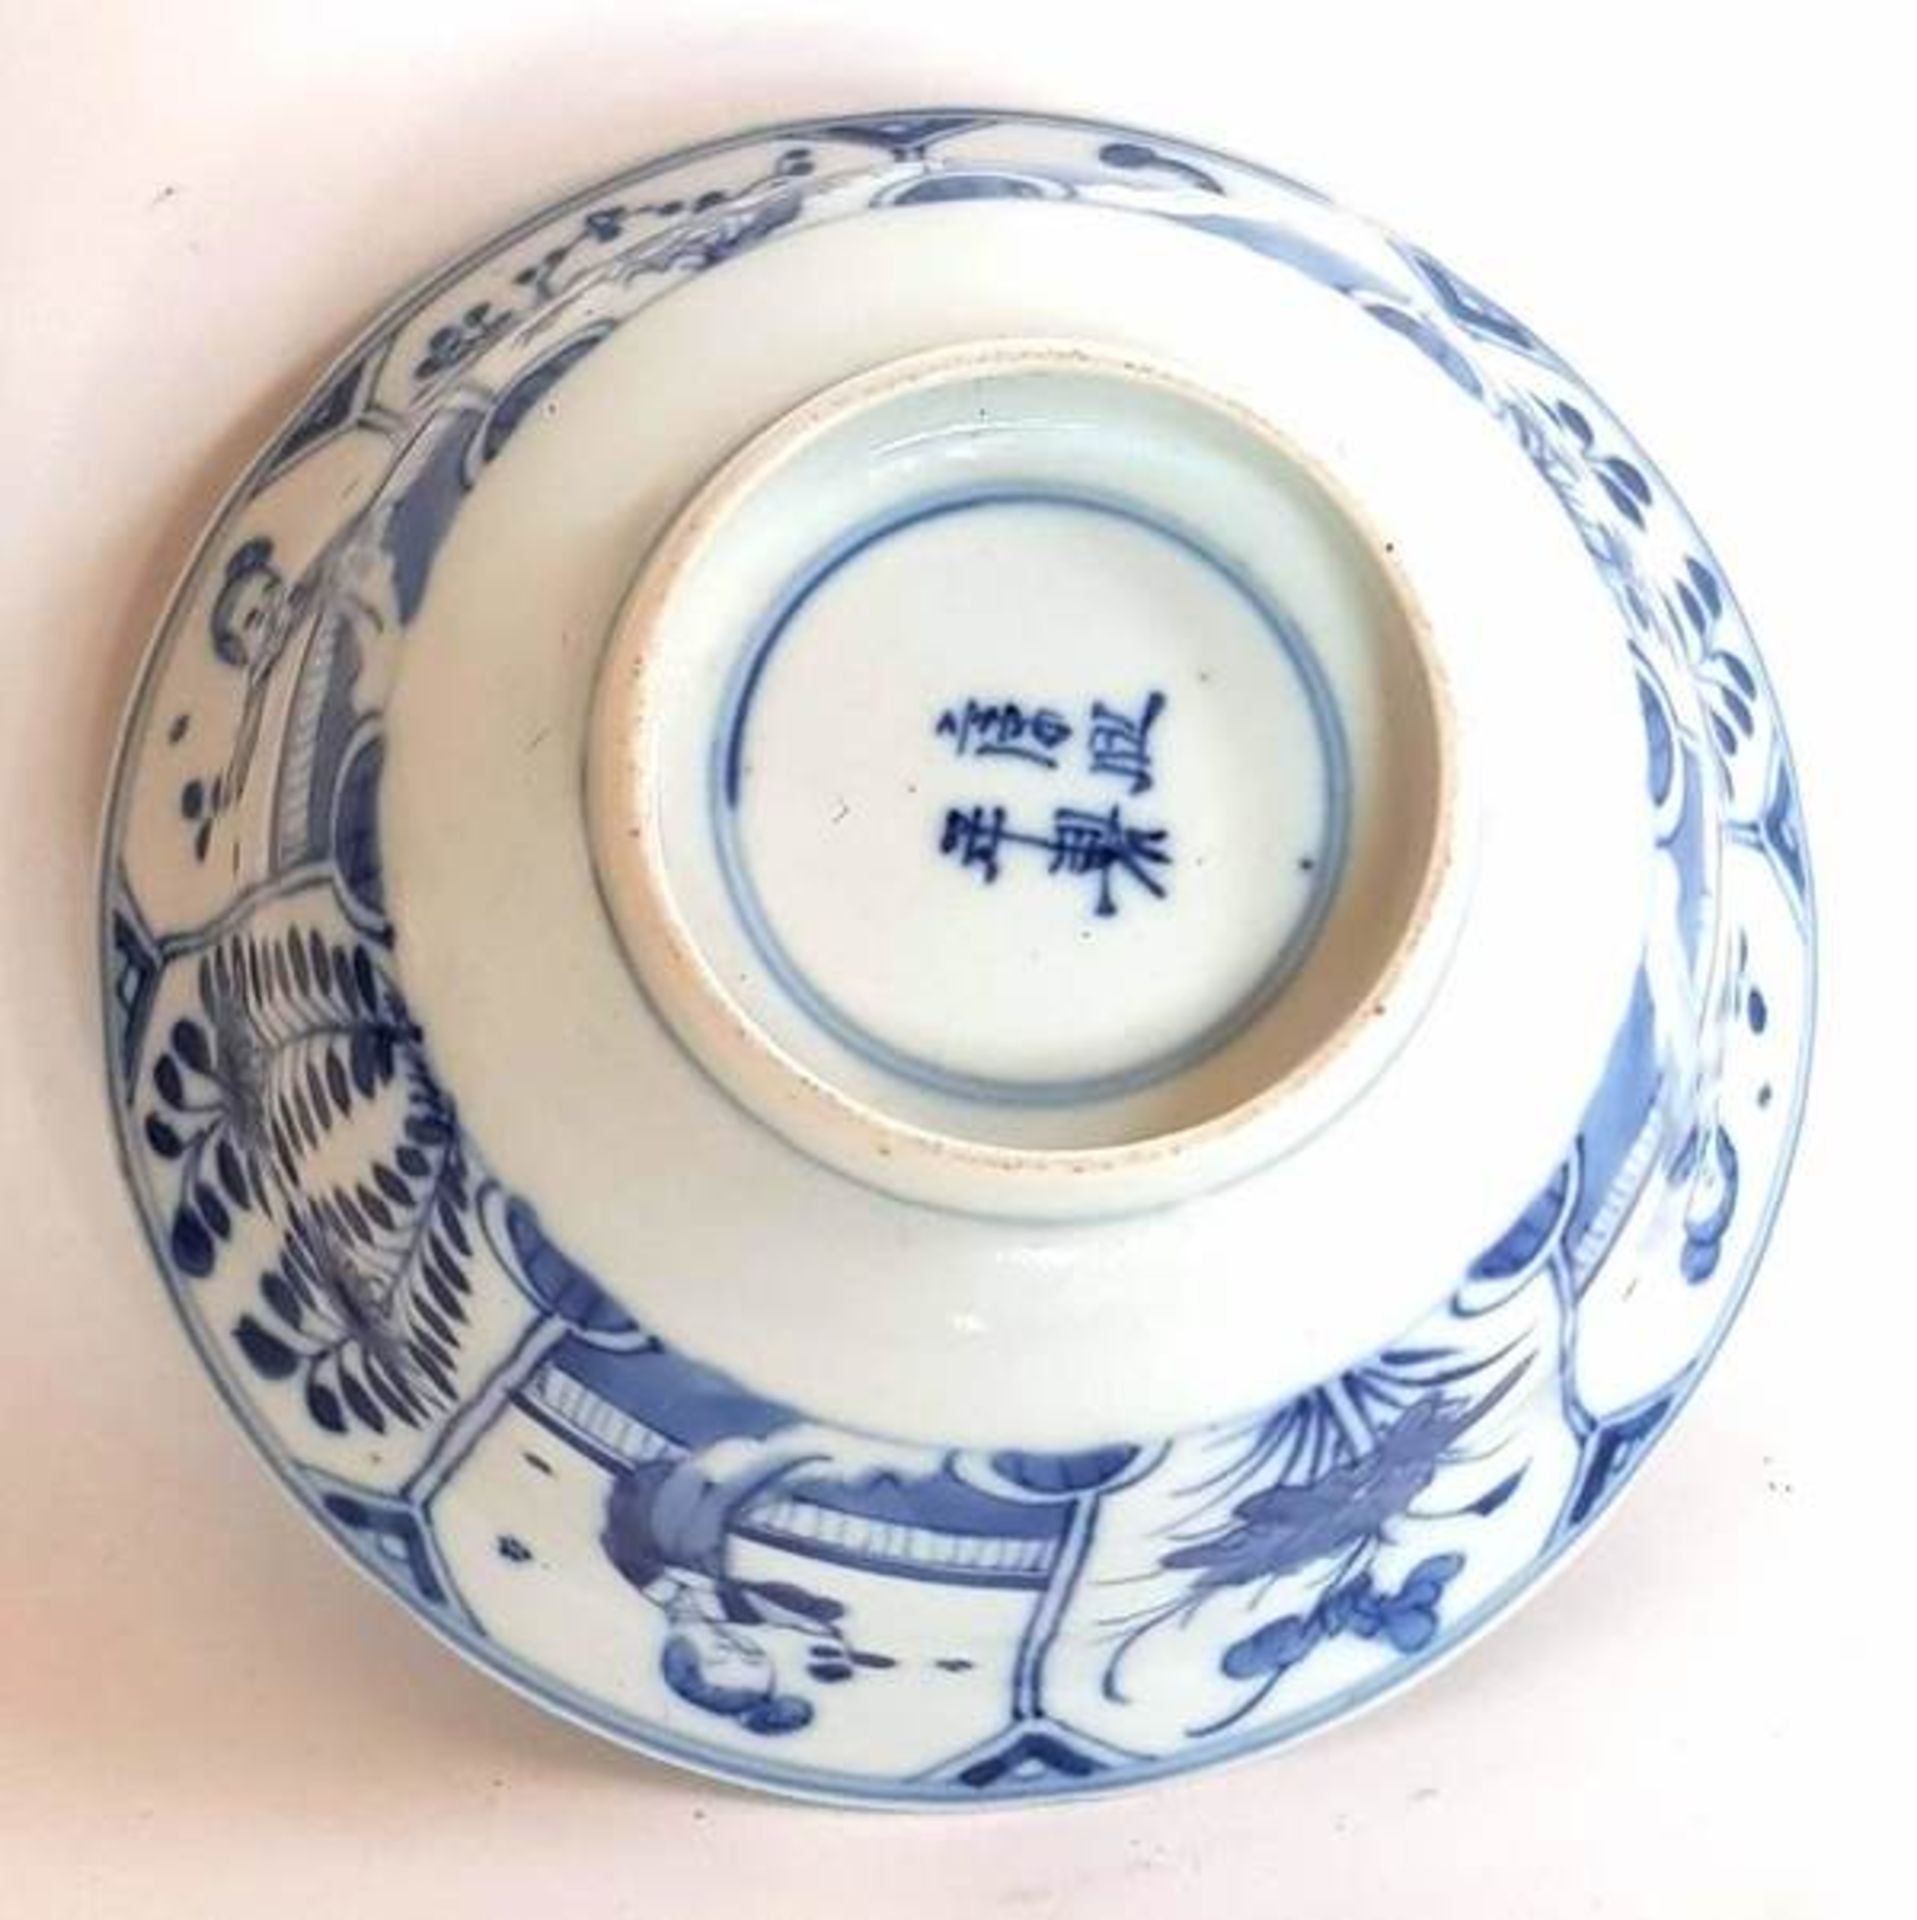 (Aziatica) Porselein klapmuts kom China 19e eeuwMet decoratie van lijzen. Onderzijde 4 - Bild 5 aus 12